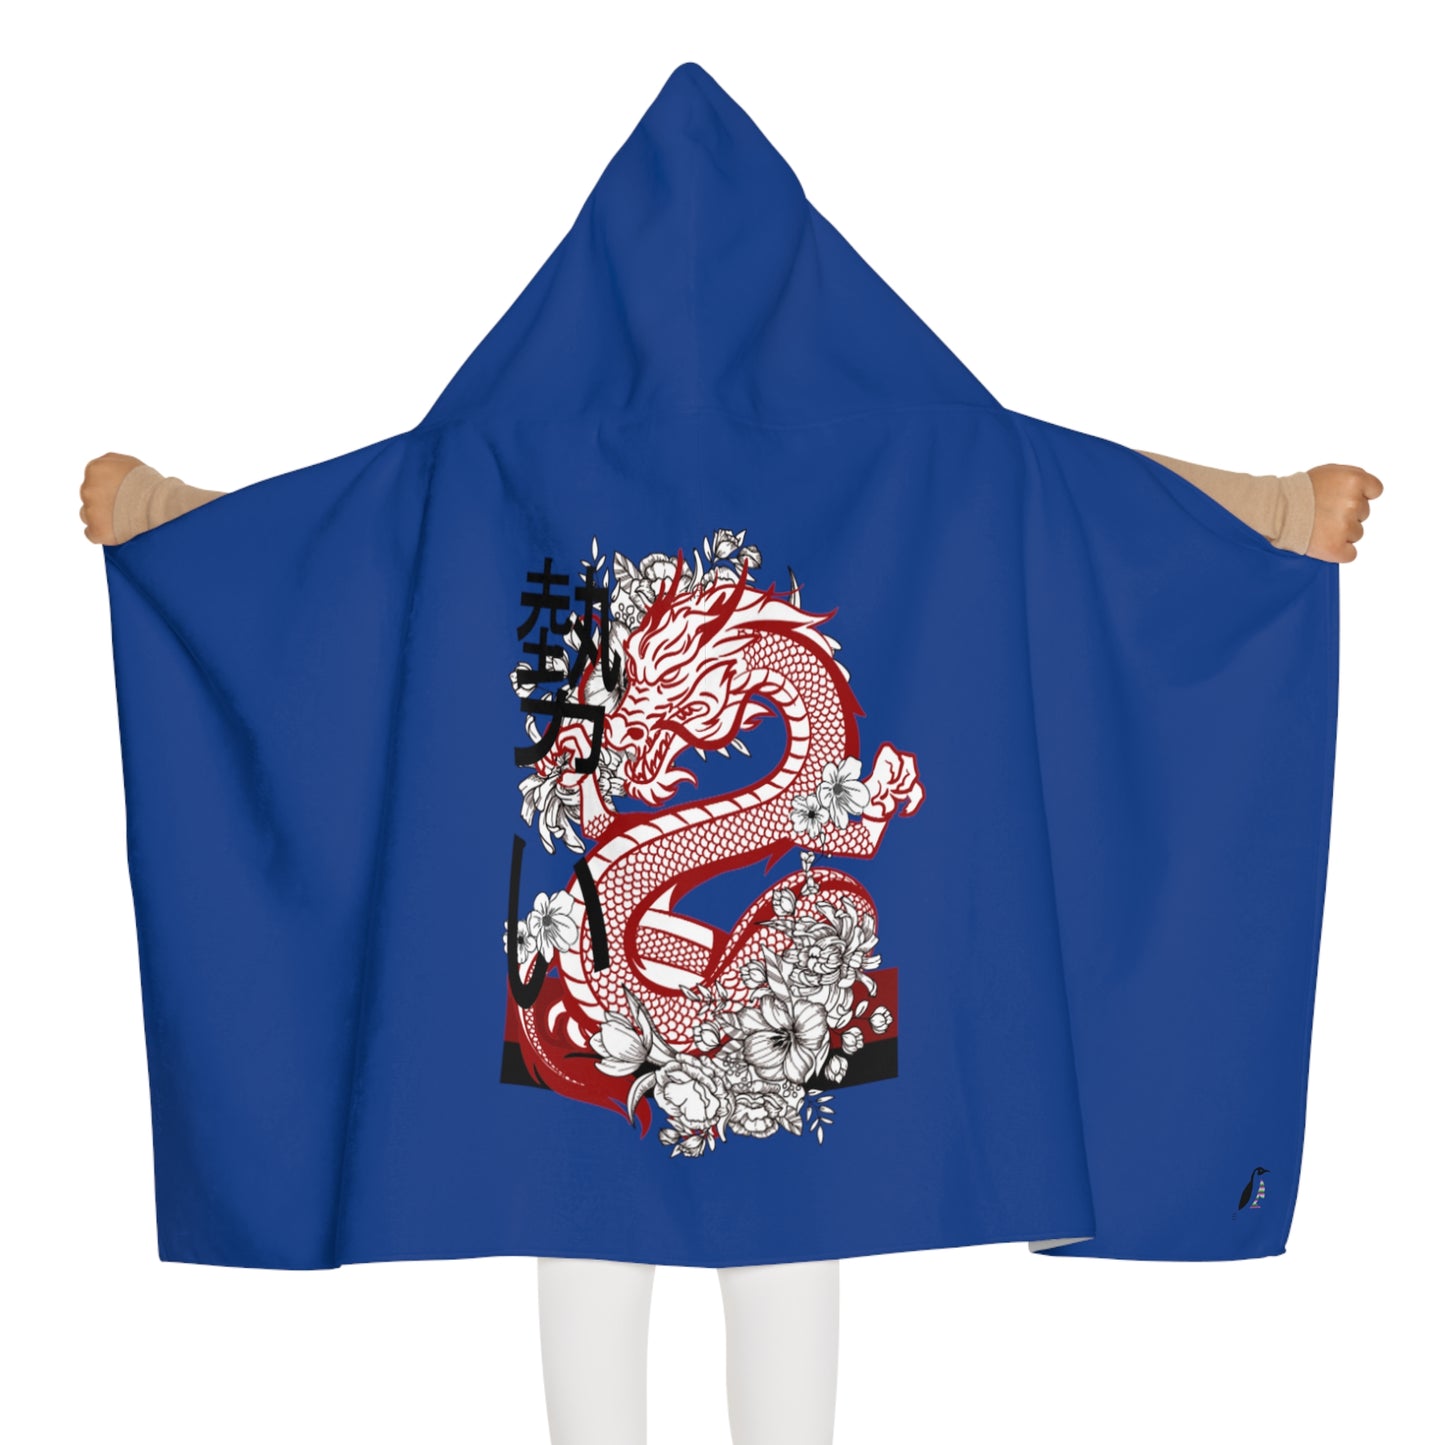 Youth Hooded Towel: Dragons Dark Blue